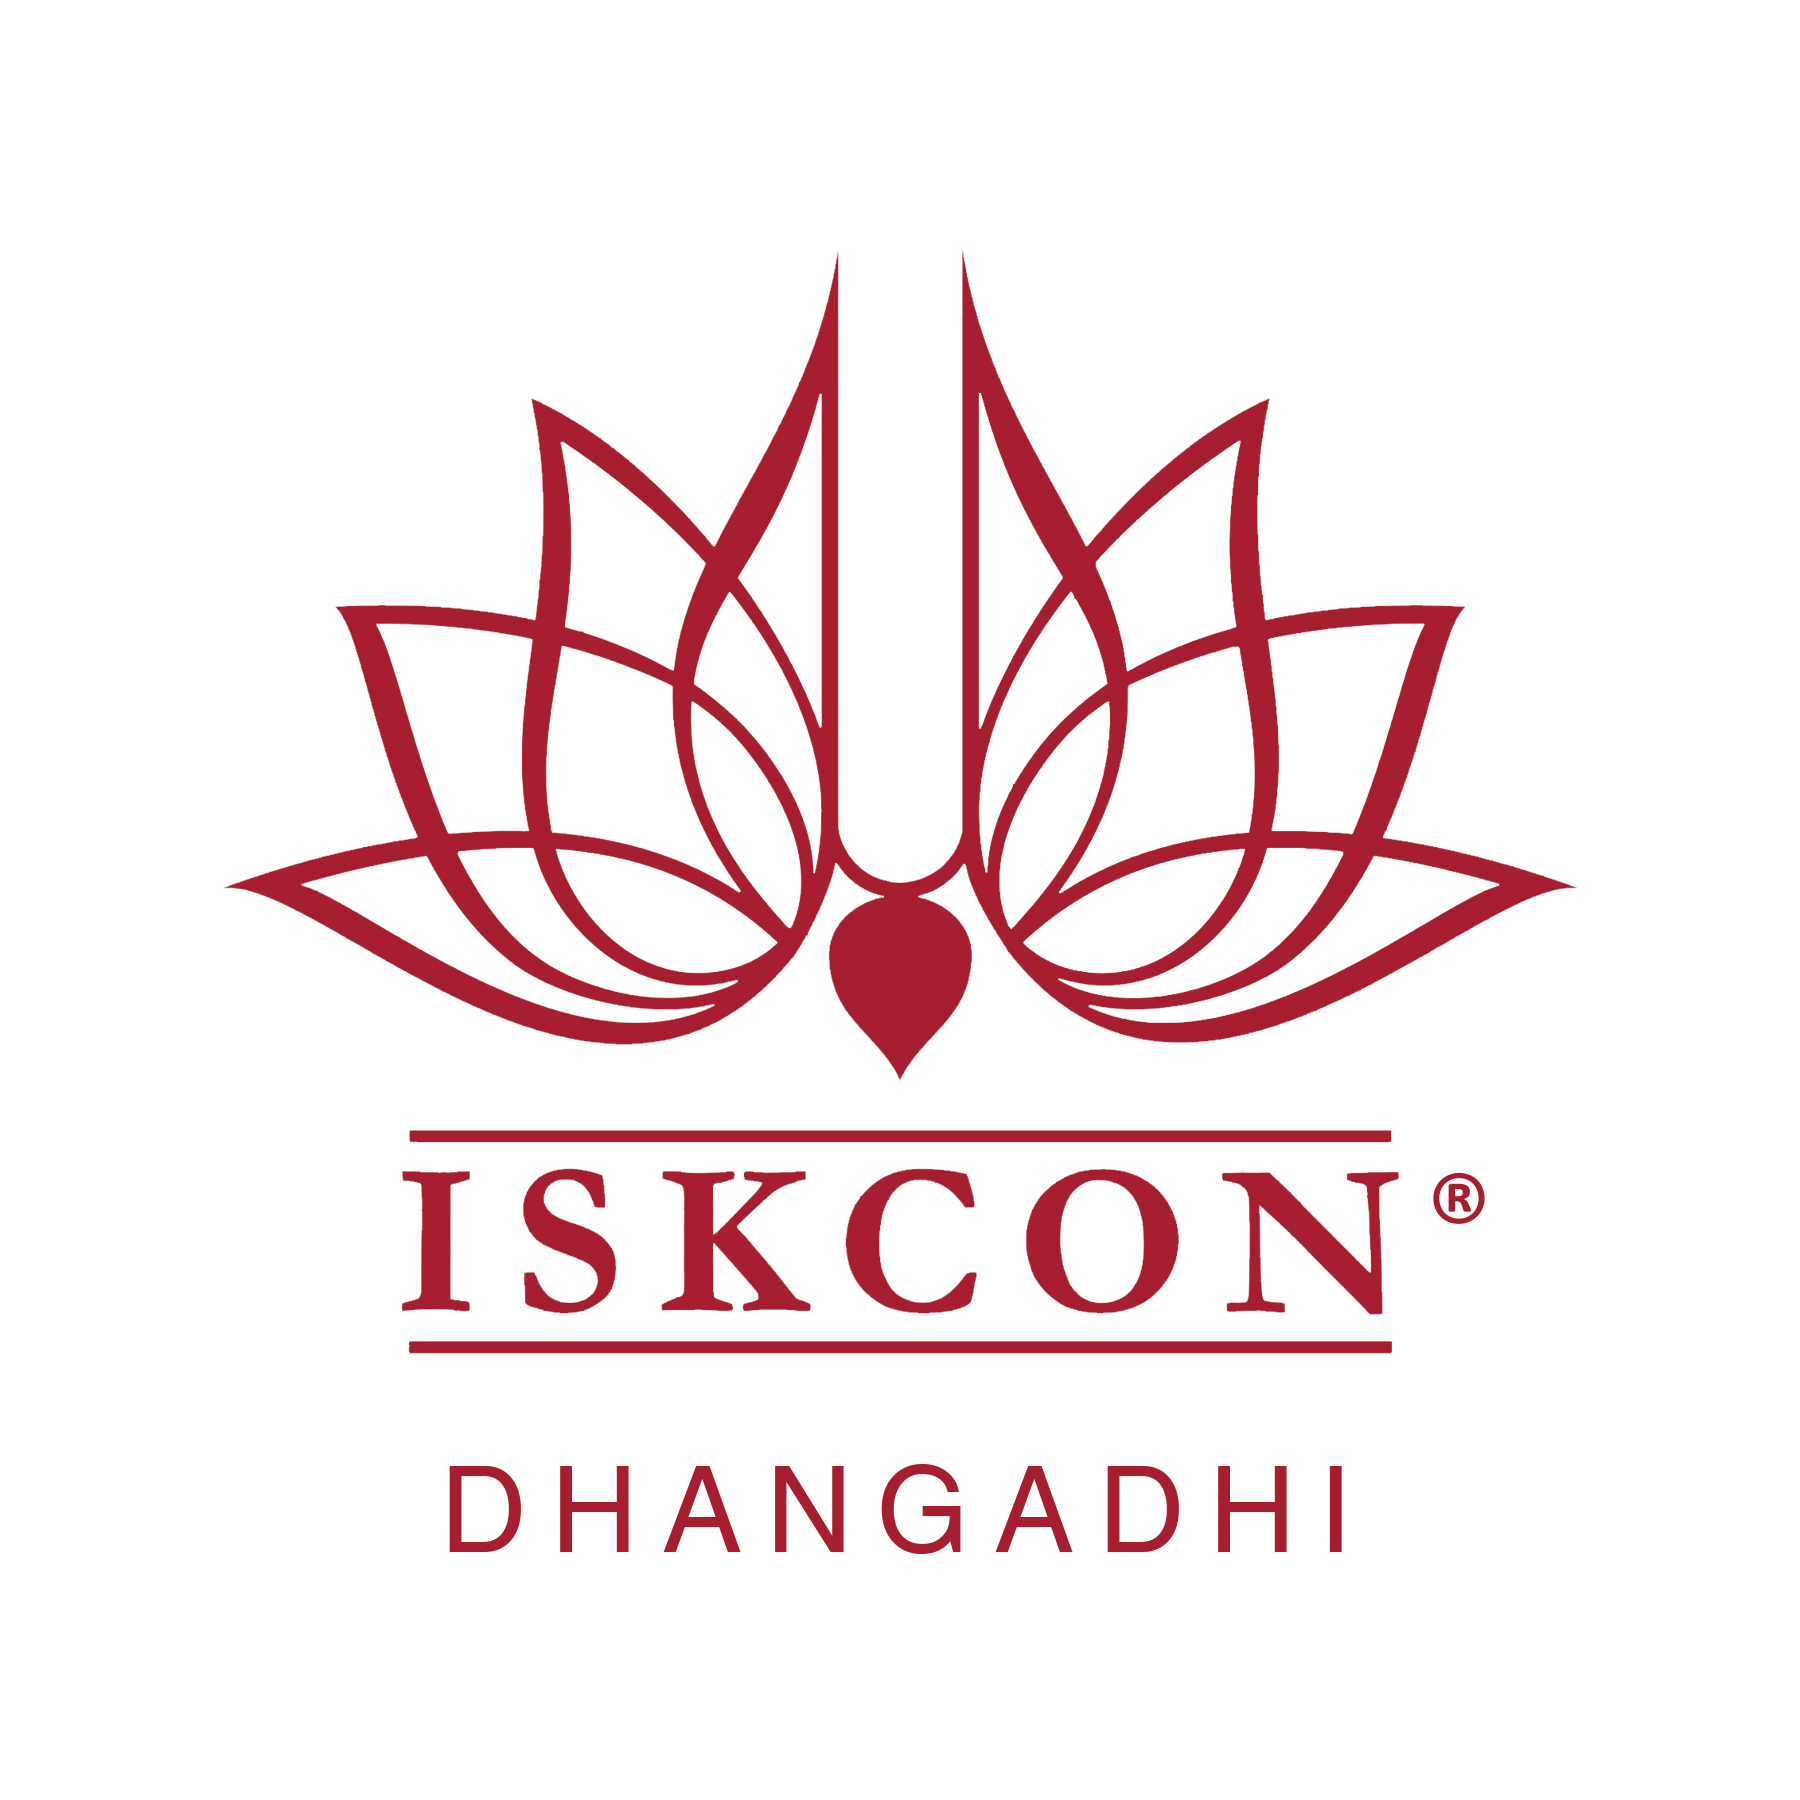 ISKCON Logo - ISKCON Lord Krishna